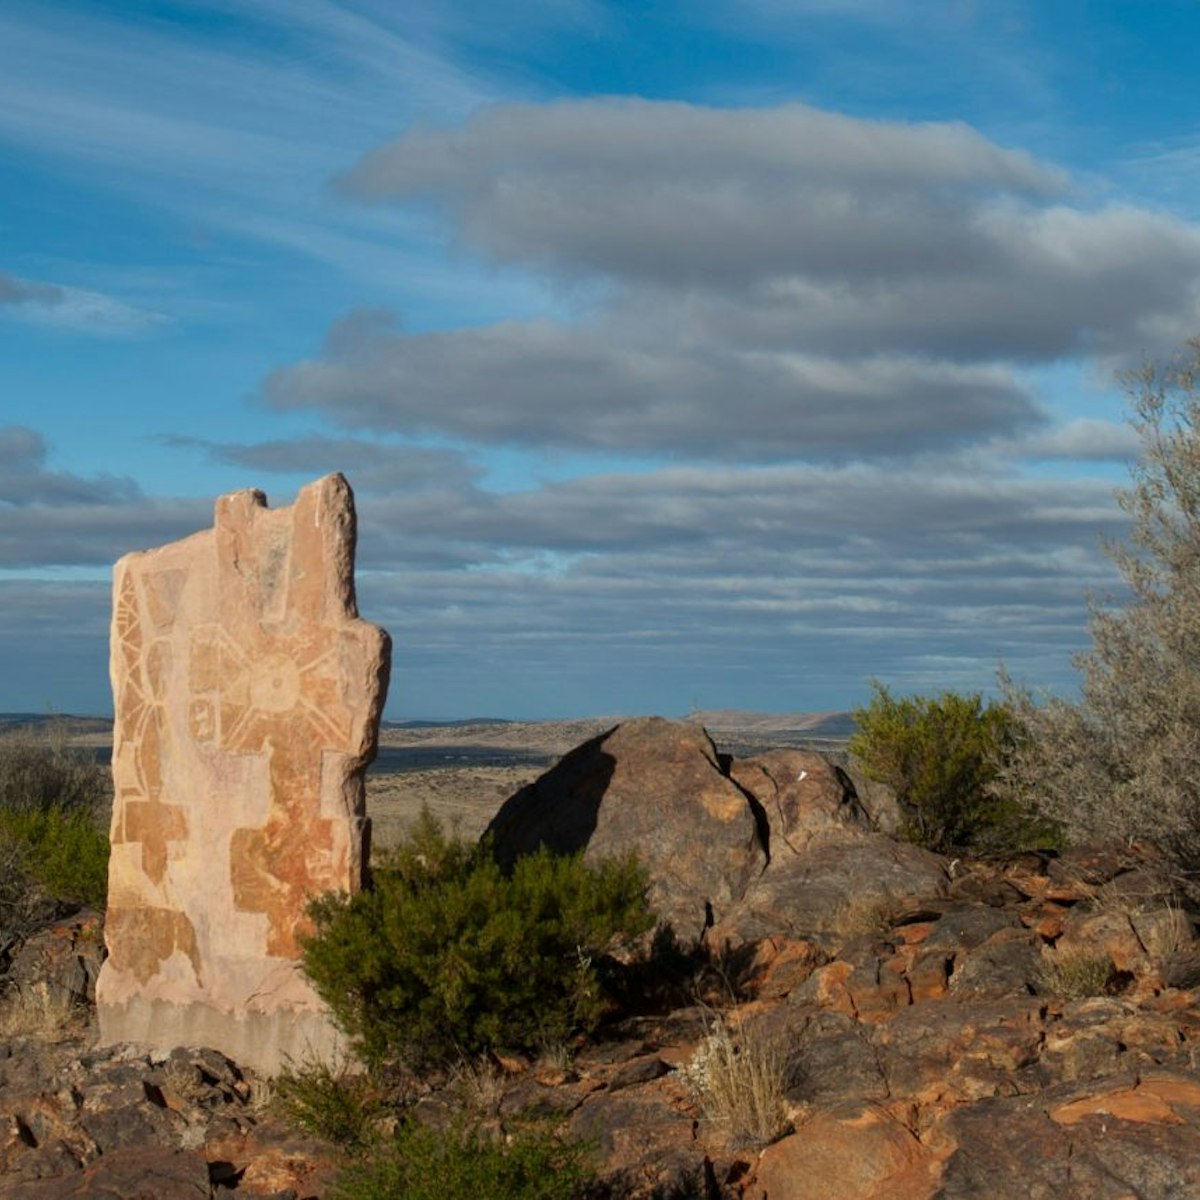 CRWJKH Details of Living Desert Sculpture Site, an open-air art exhibition set up in the Outback of Broken Hill, New South Wales
Living Desert State Park
Australia
